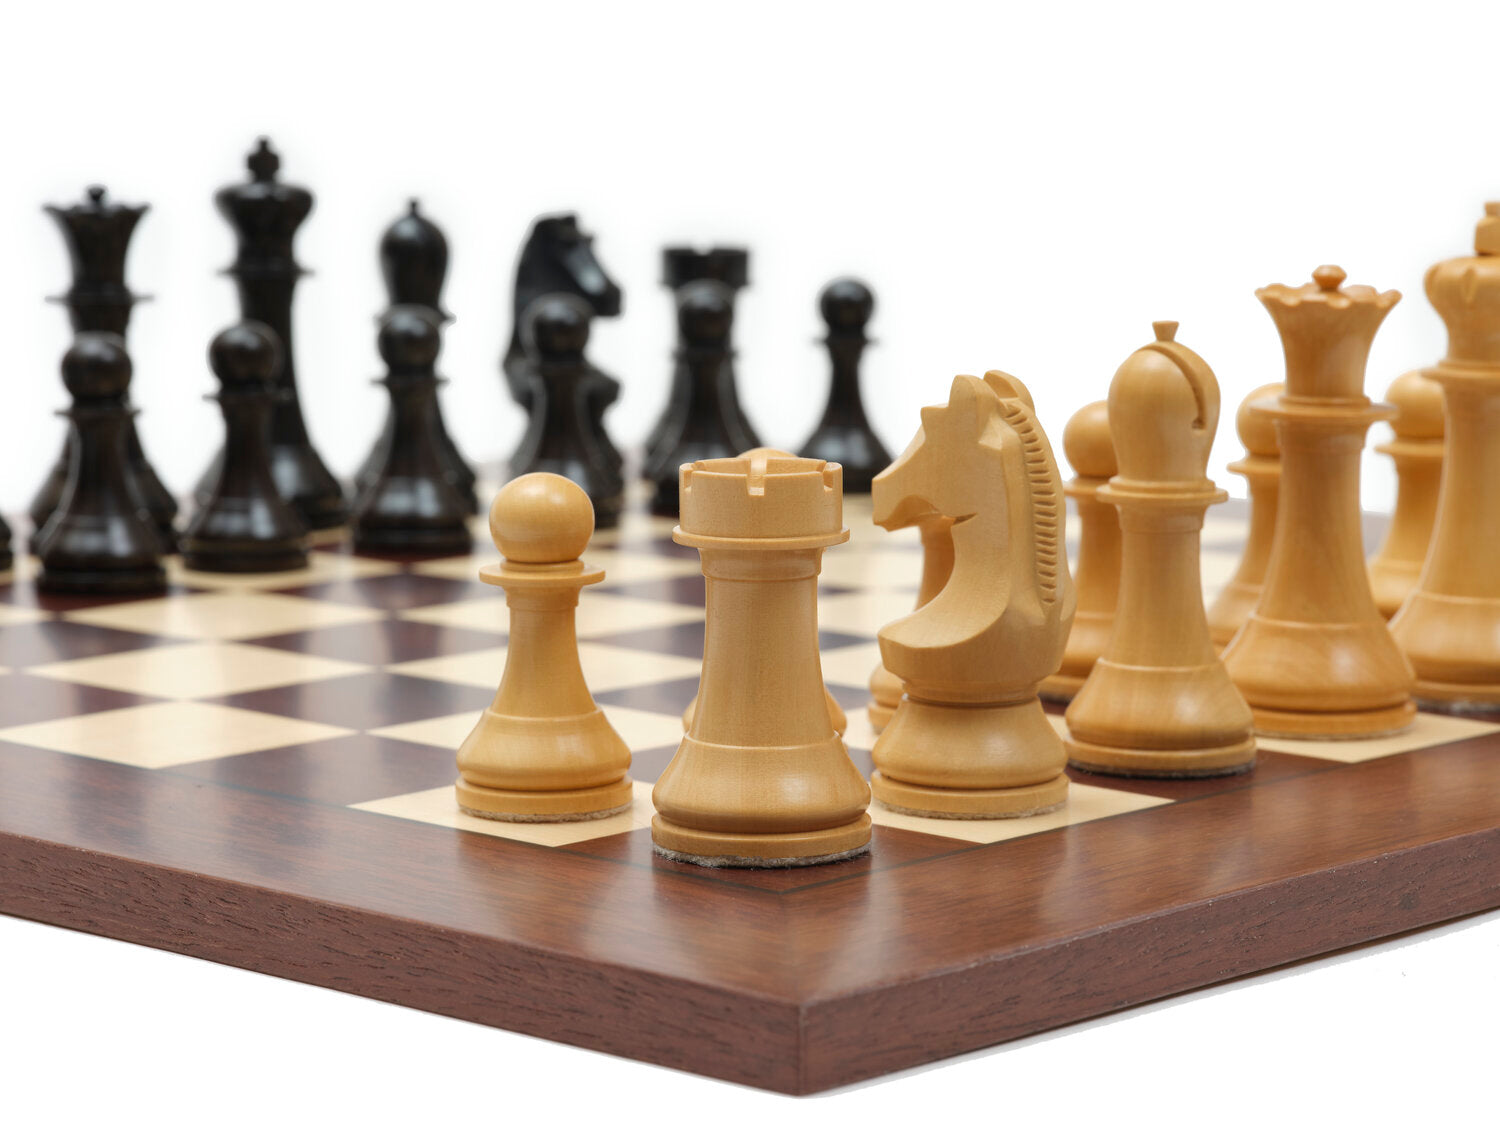  World Chess Championship Set Full Official Tournament